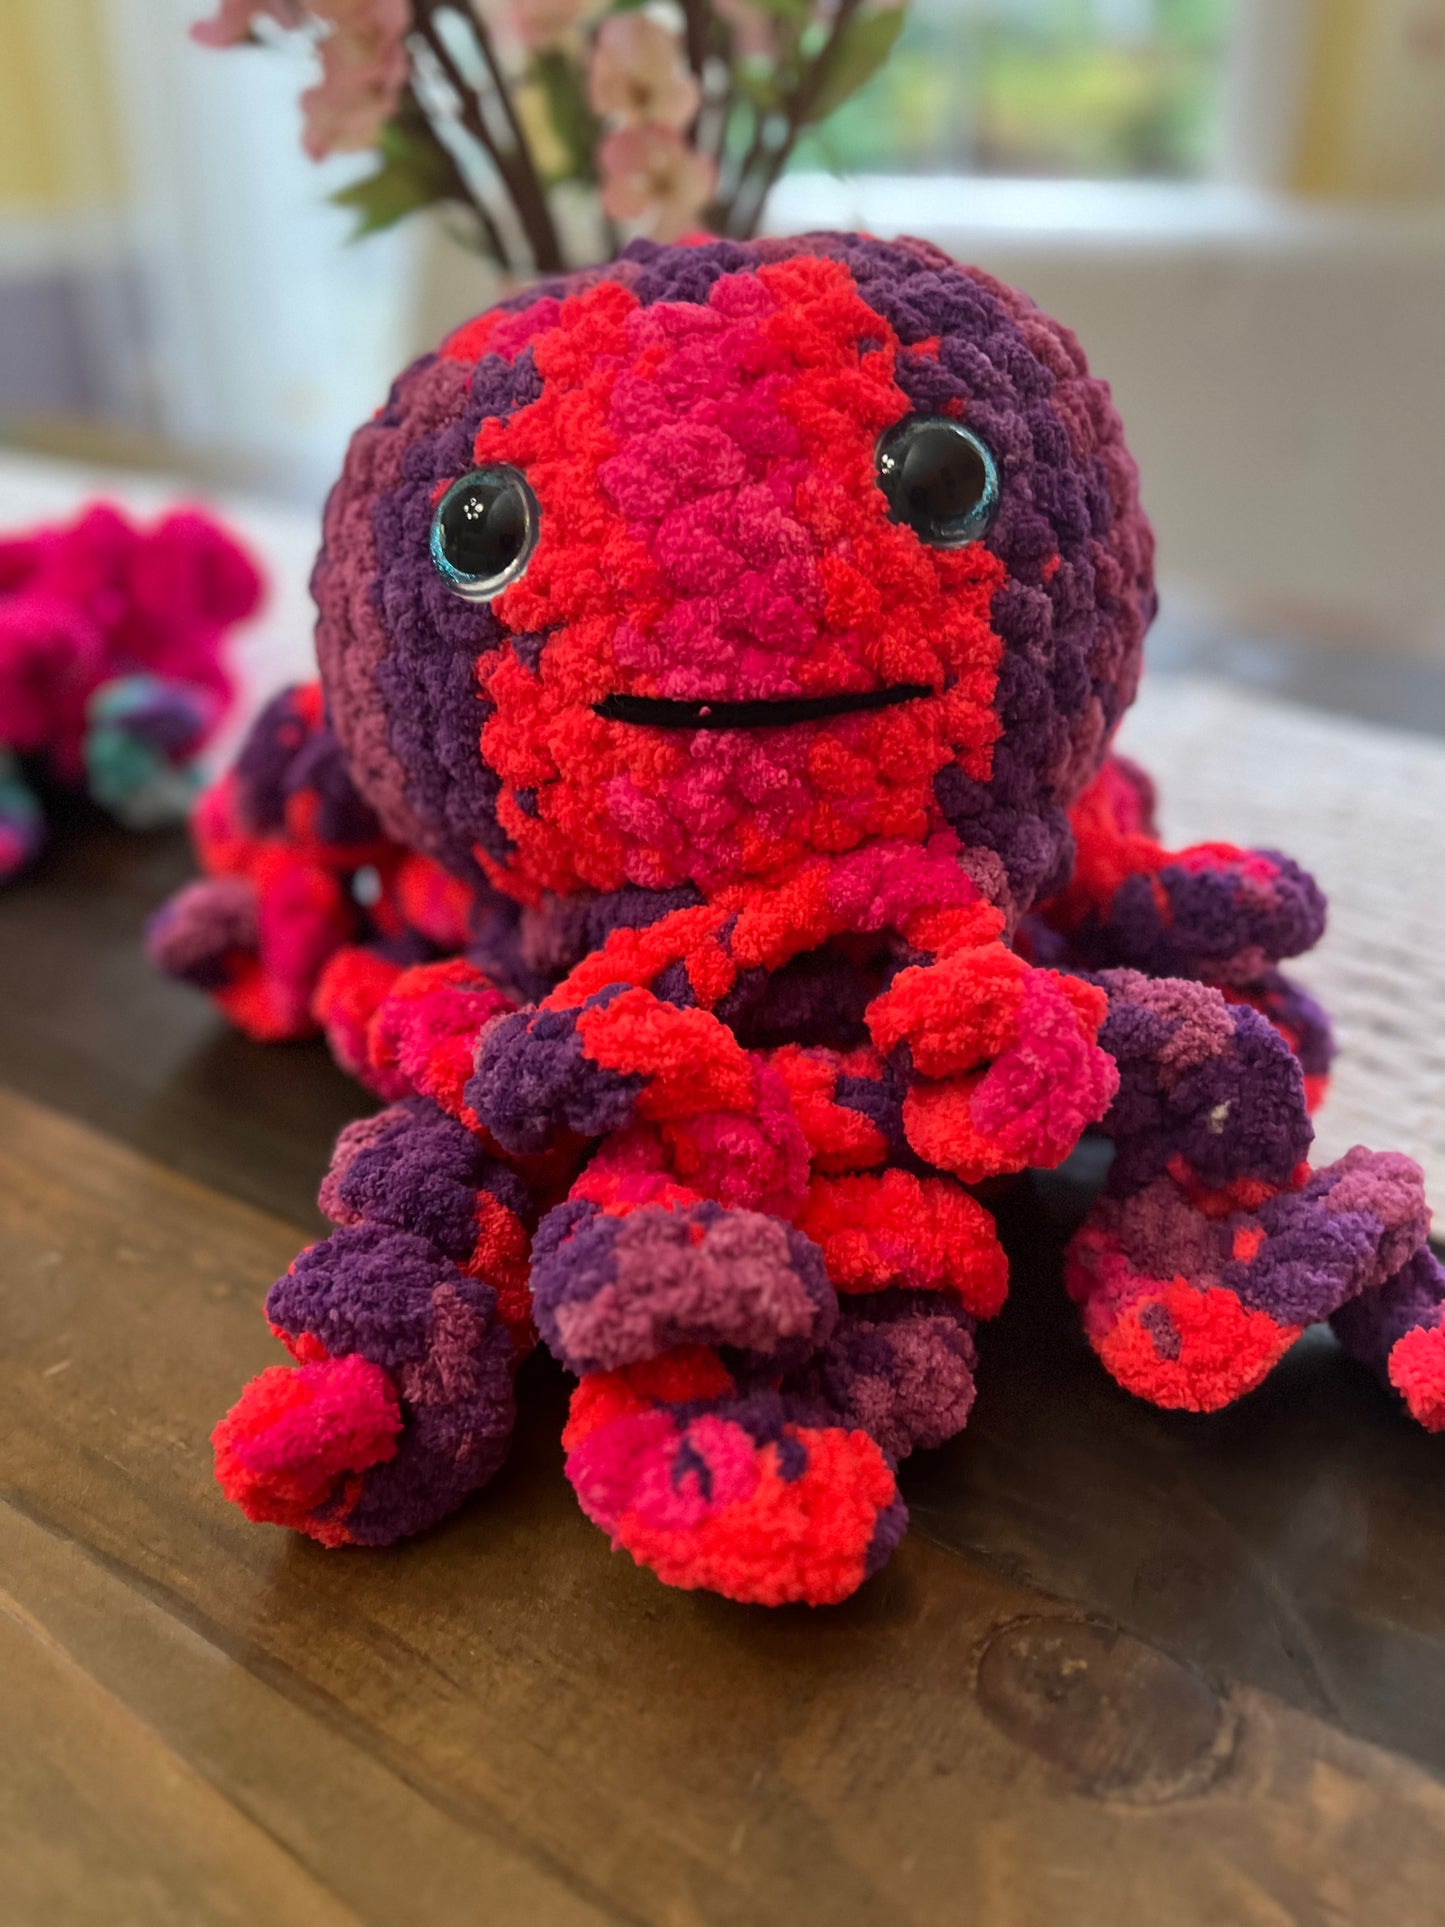 Stuffed Plushy Big Jellyfish - Crochet Amigurumi Toy (Different Colors Available)